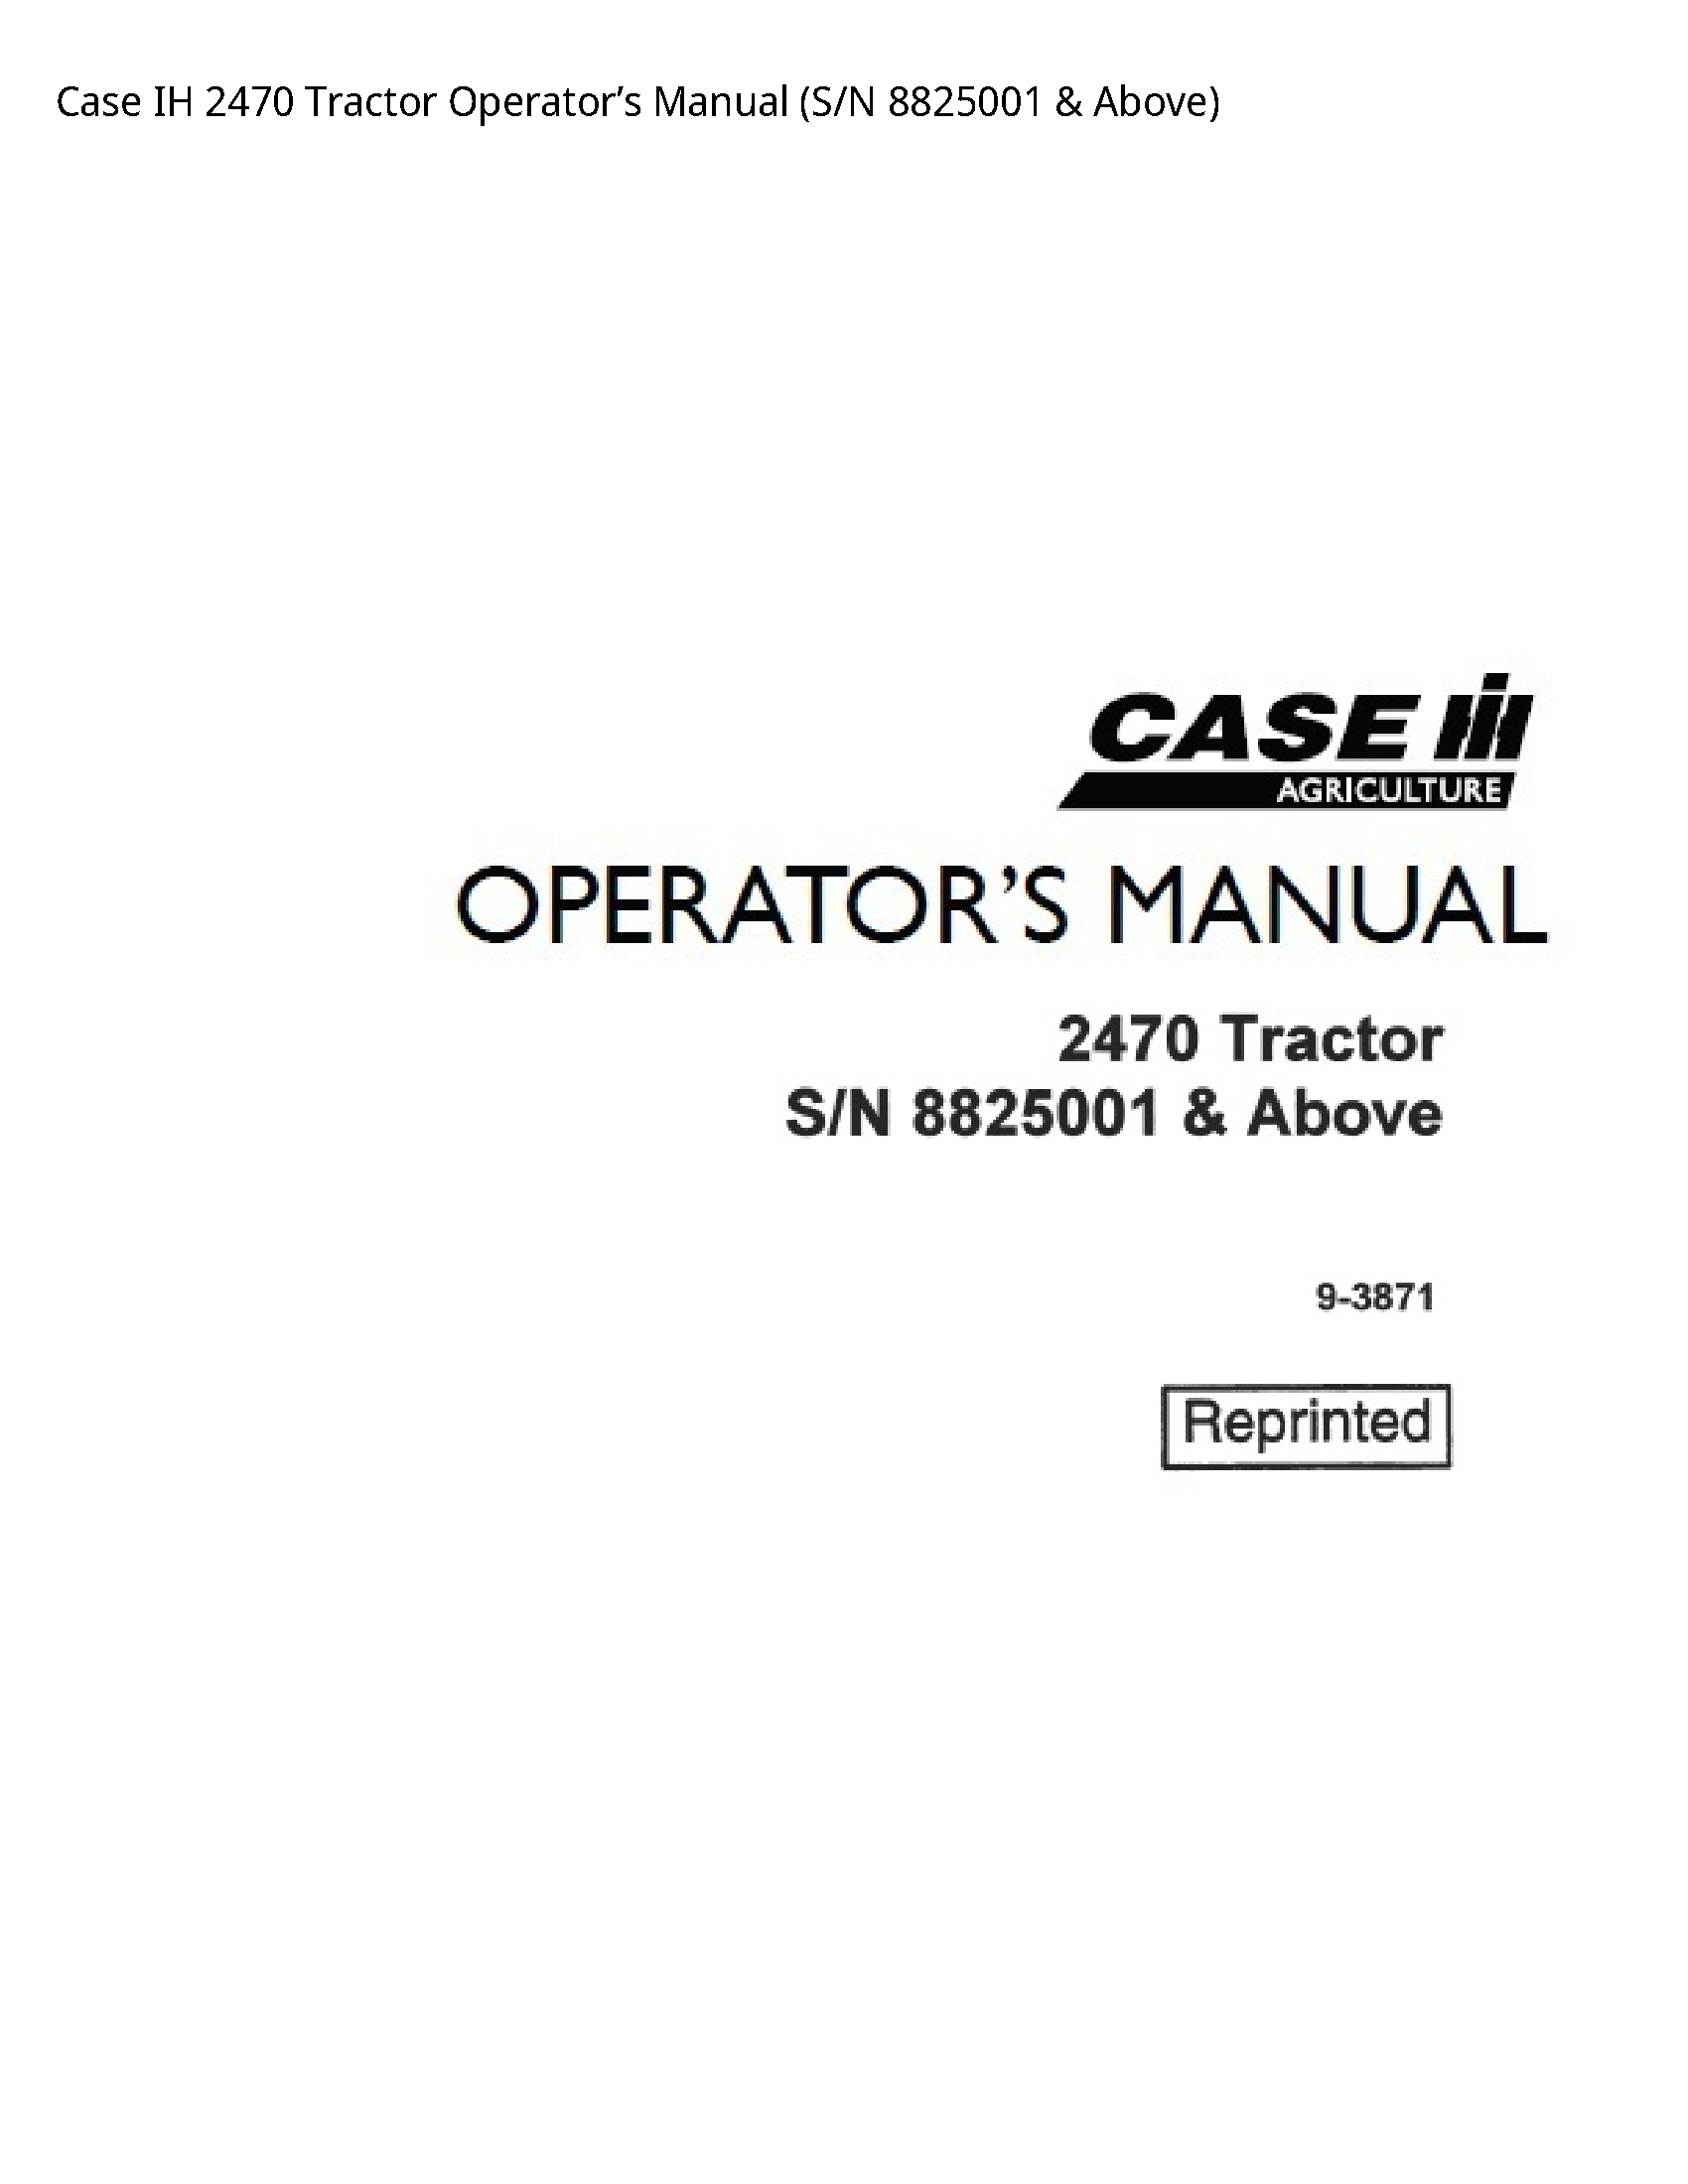 Case/Case IH 2470 IH Tractor Operator’s manual